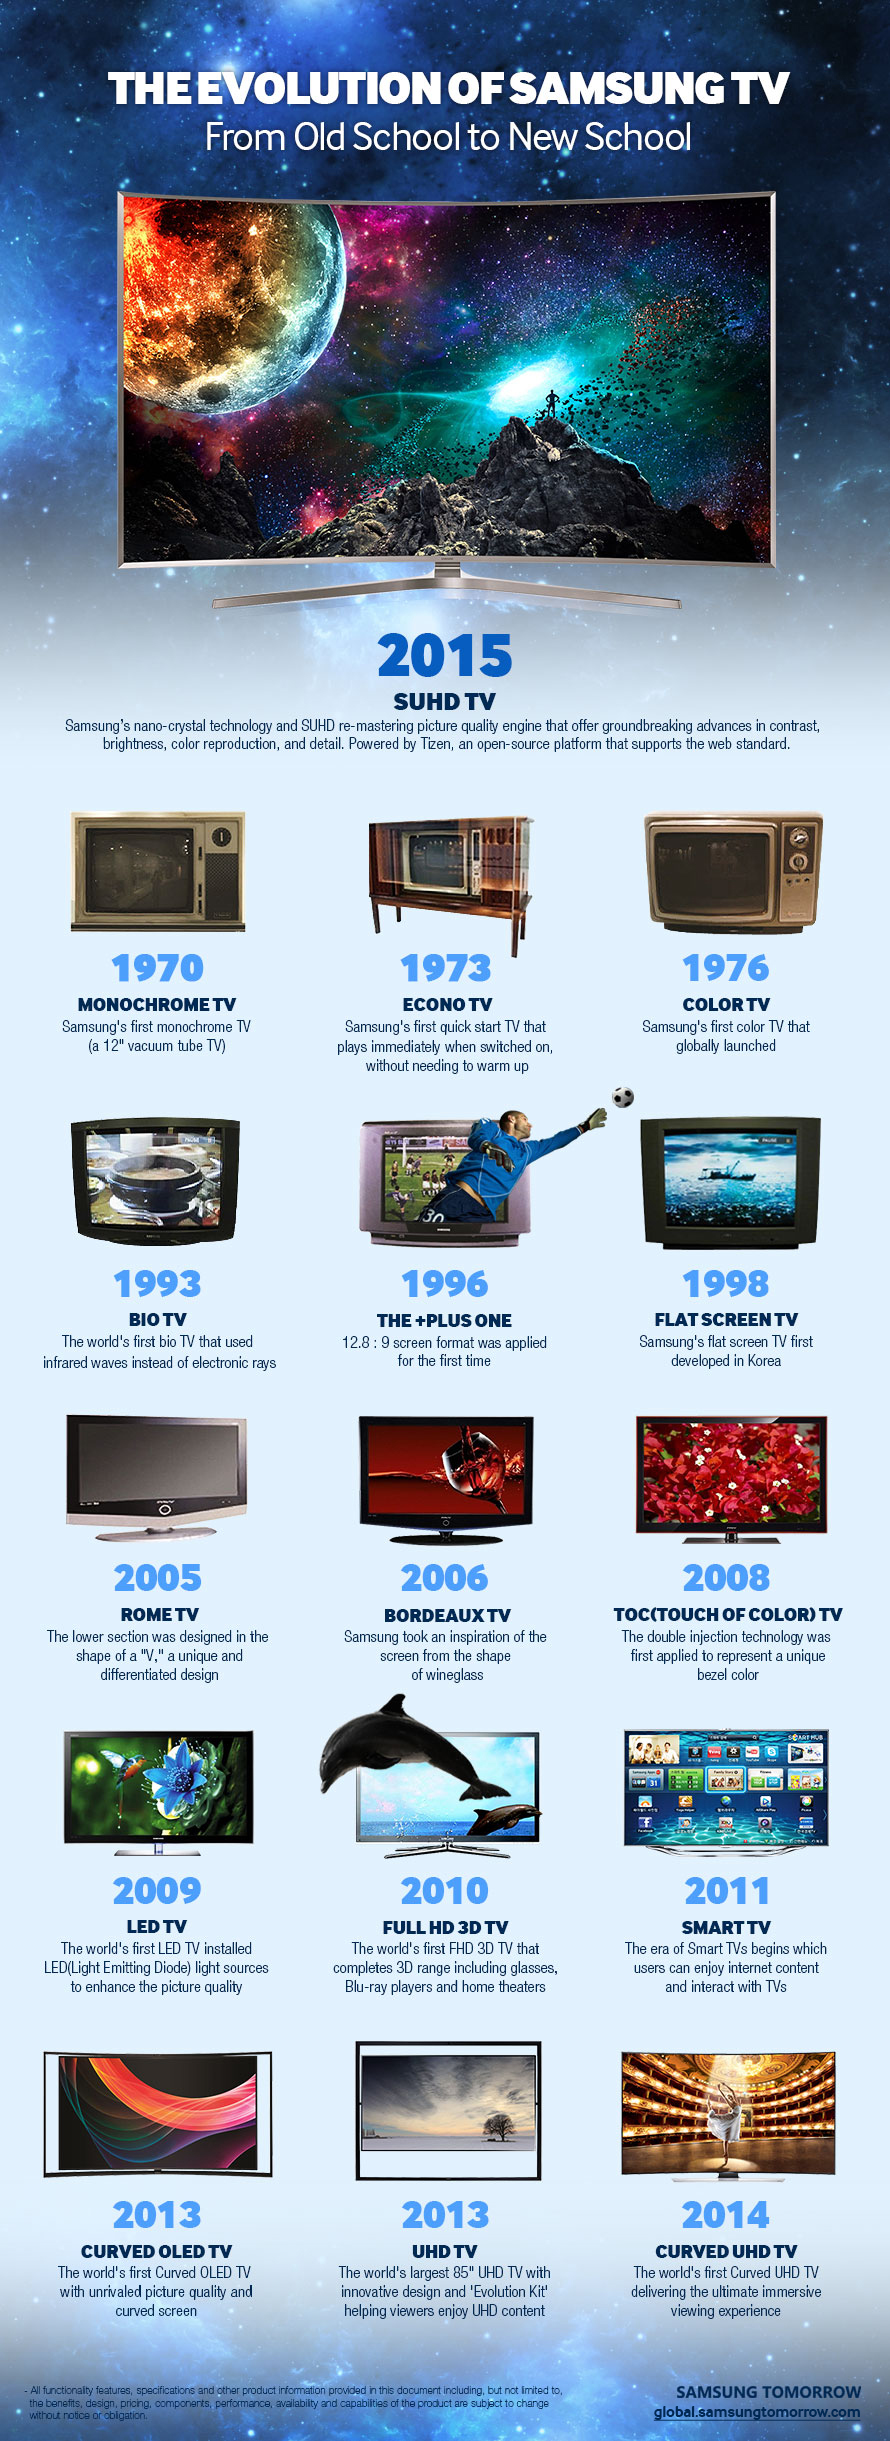 The Evolution of Samsung TV